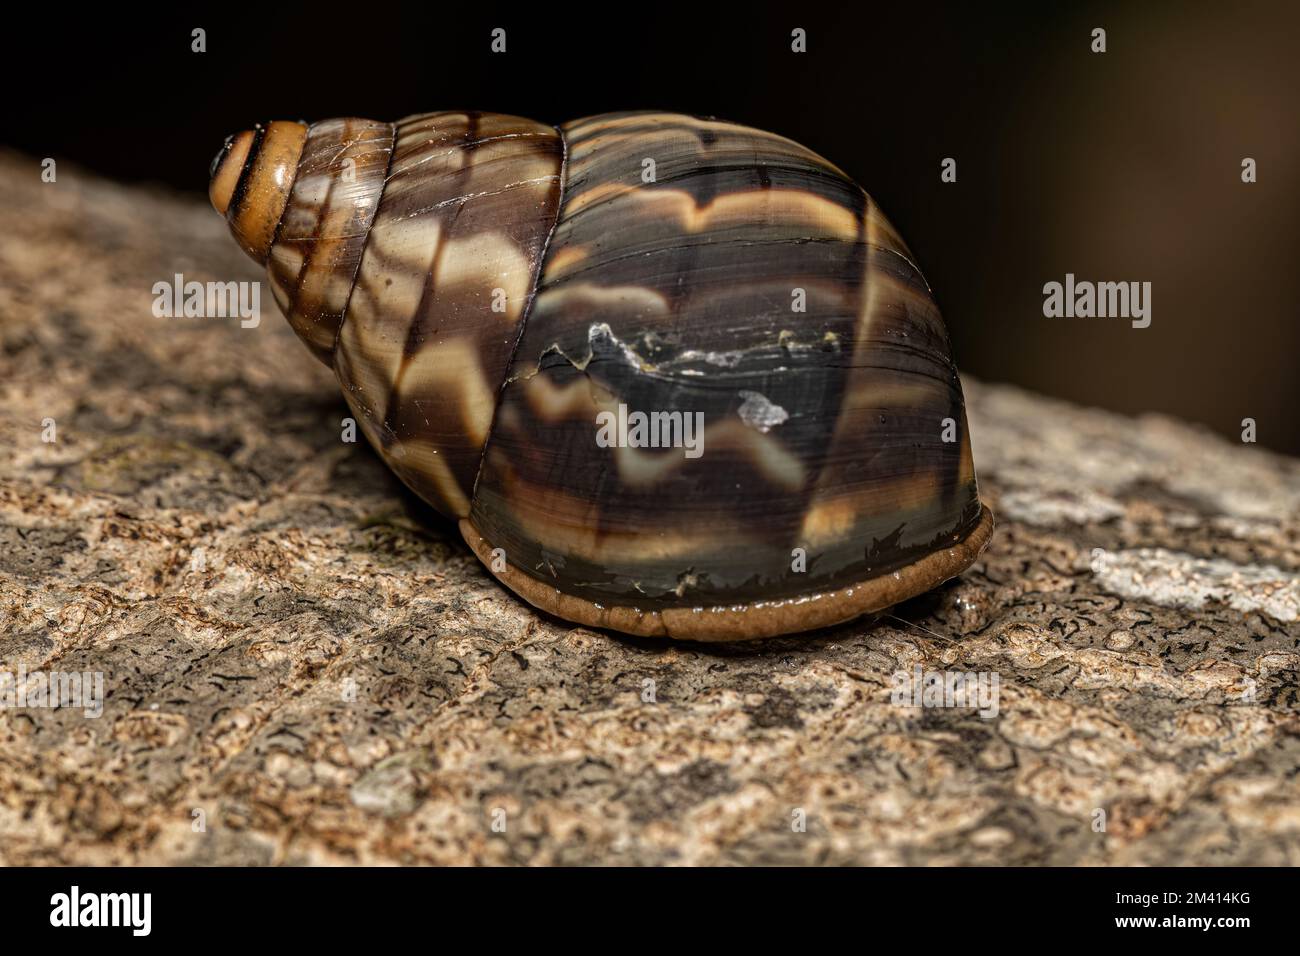 Common Land Snail of the Genus Corona Stock Photo